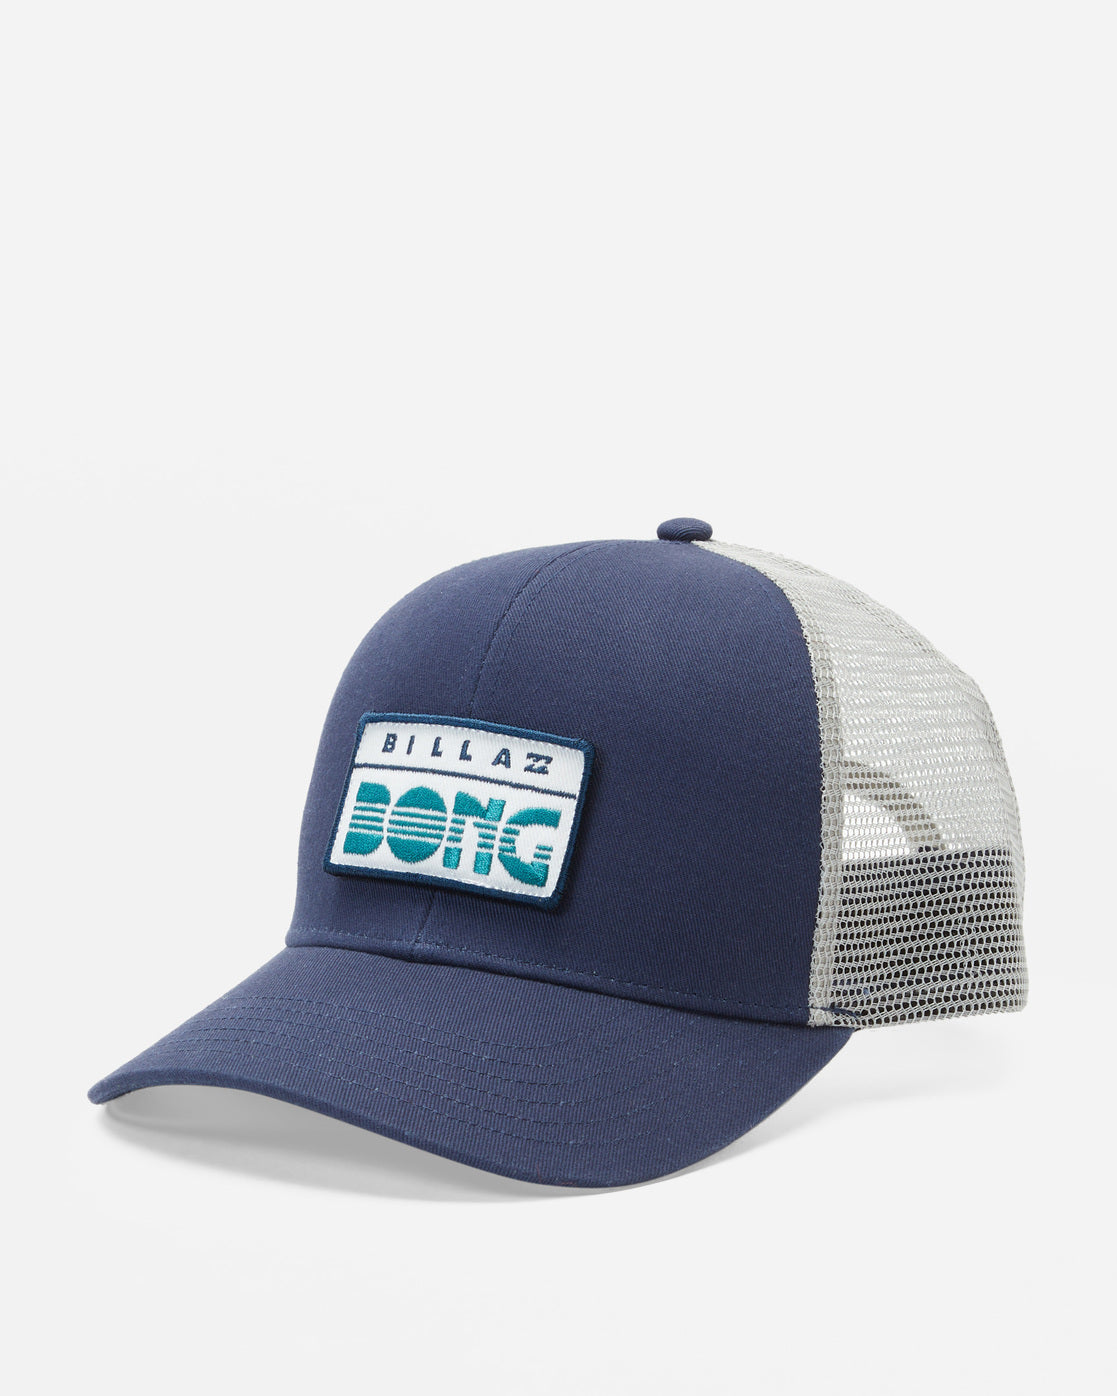 Walled Trucker Hat - Navy Blue